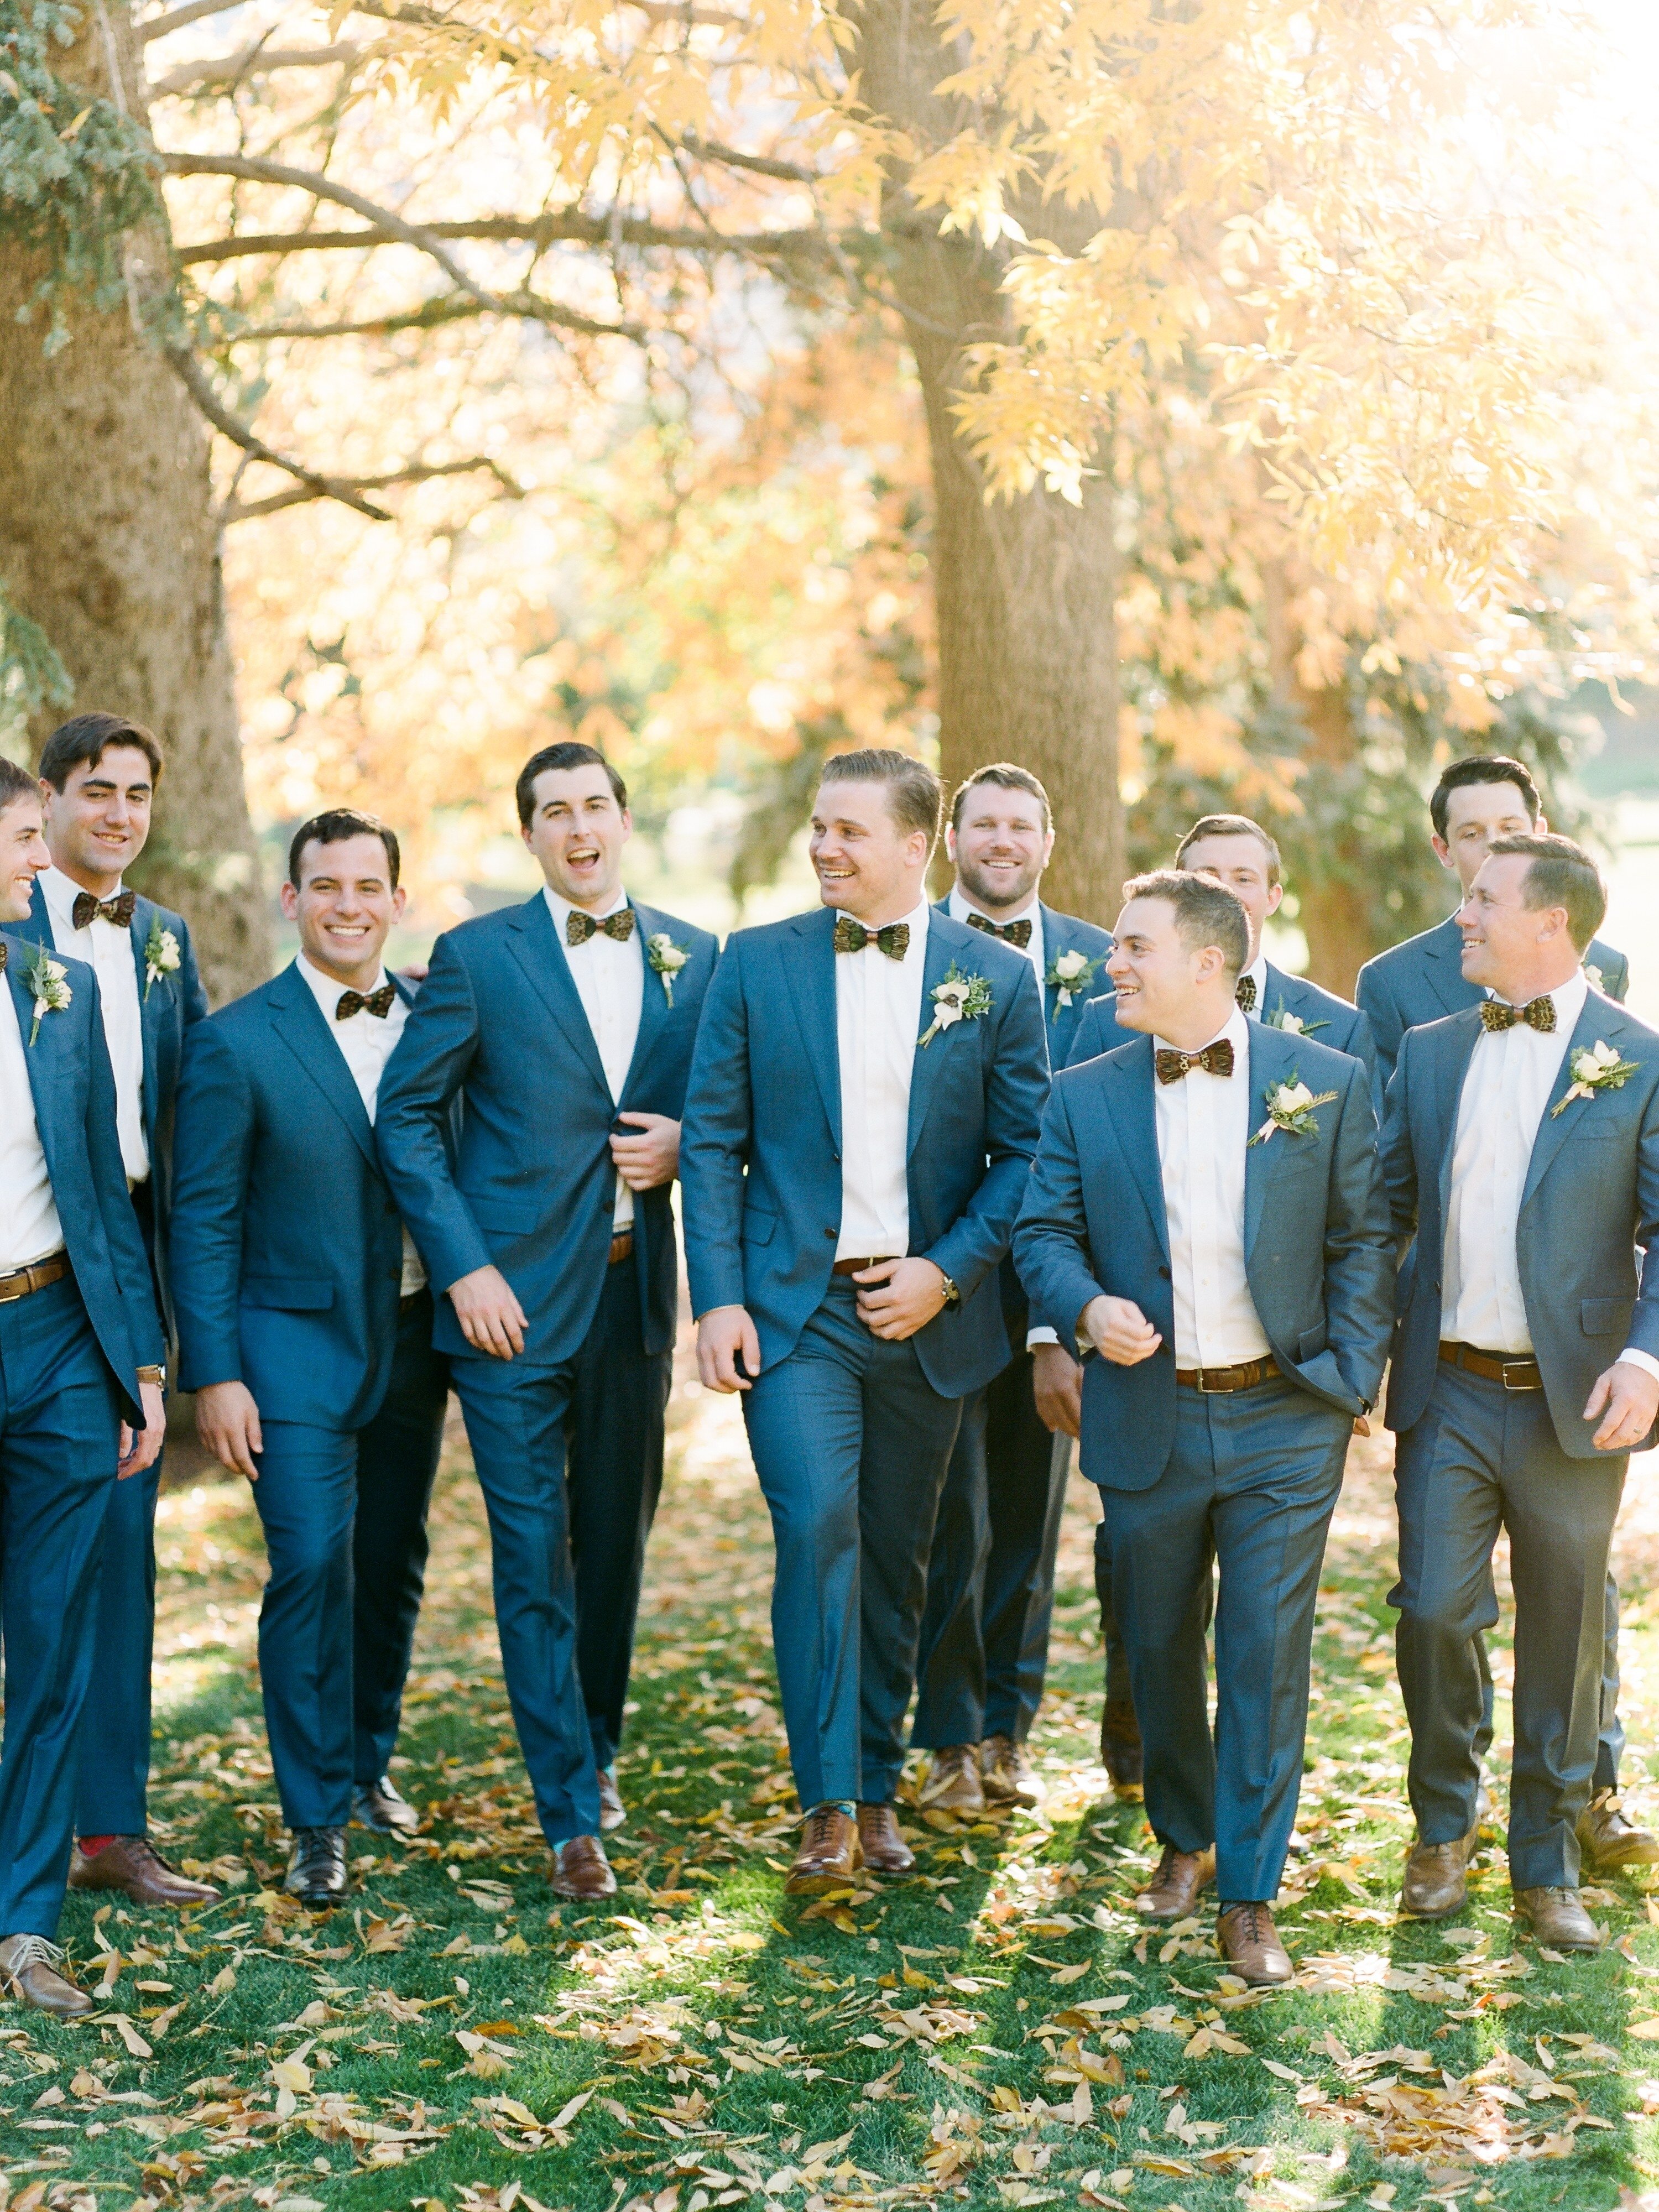 10 Fashionable Groom And Groomsmen Attire Ideas groom groomsmen style photos ideas brides 2022